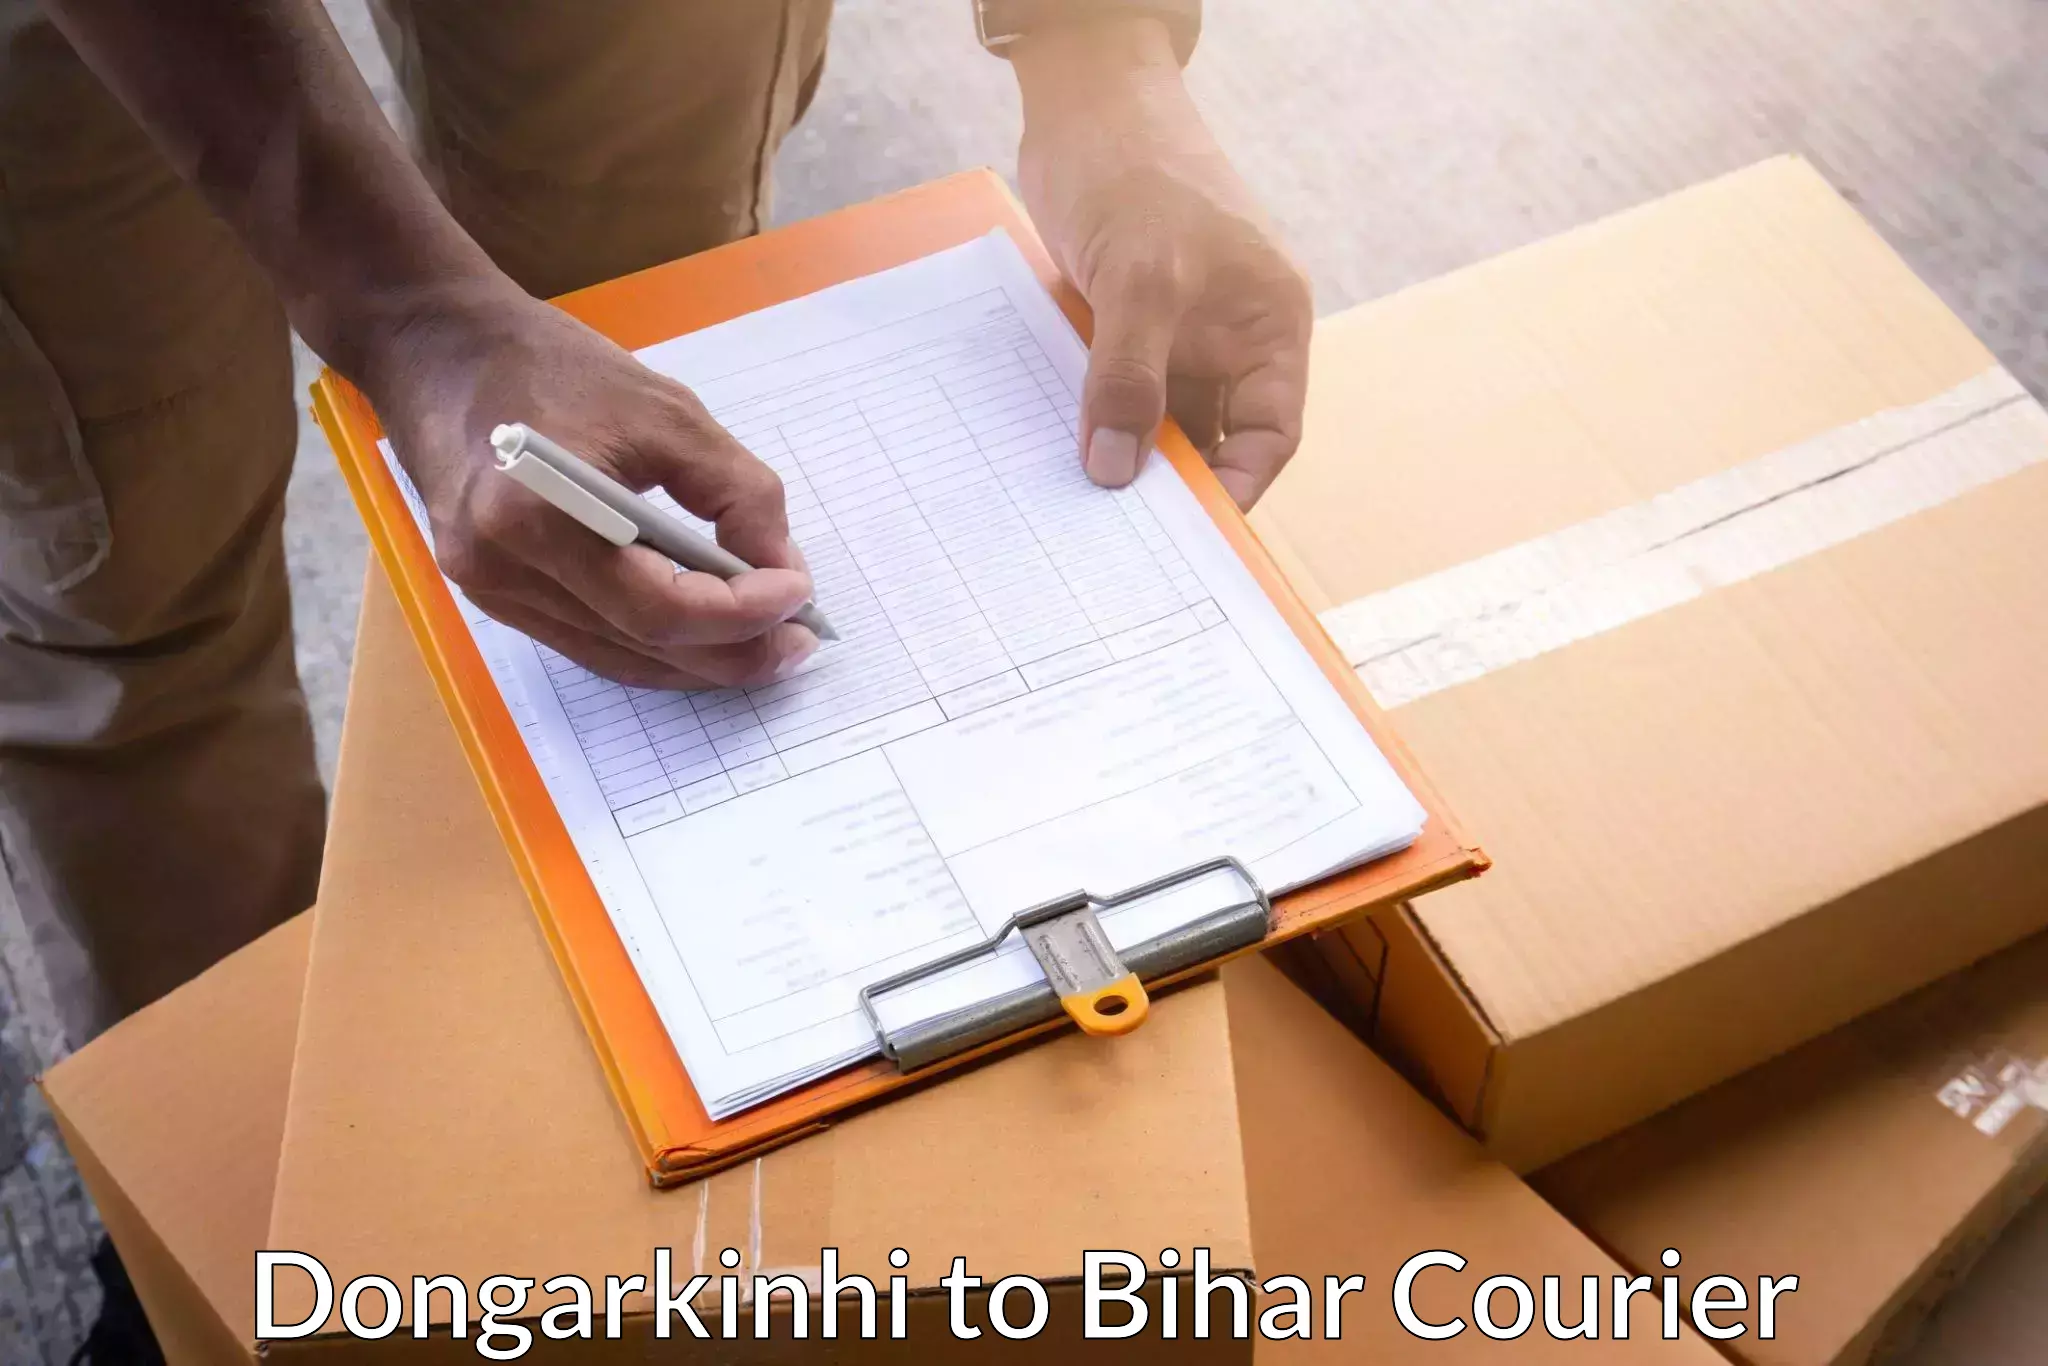 Online package tracking Dongarkinhi to Kochas